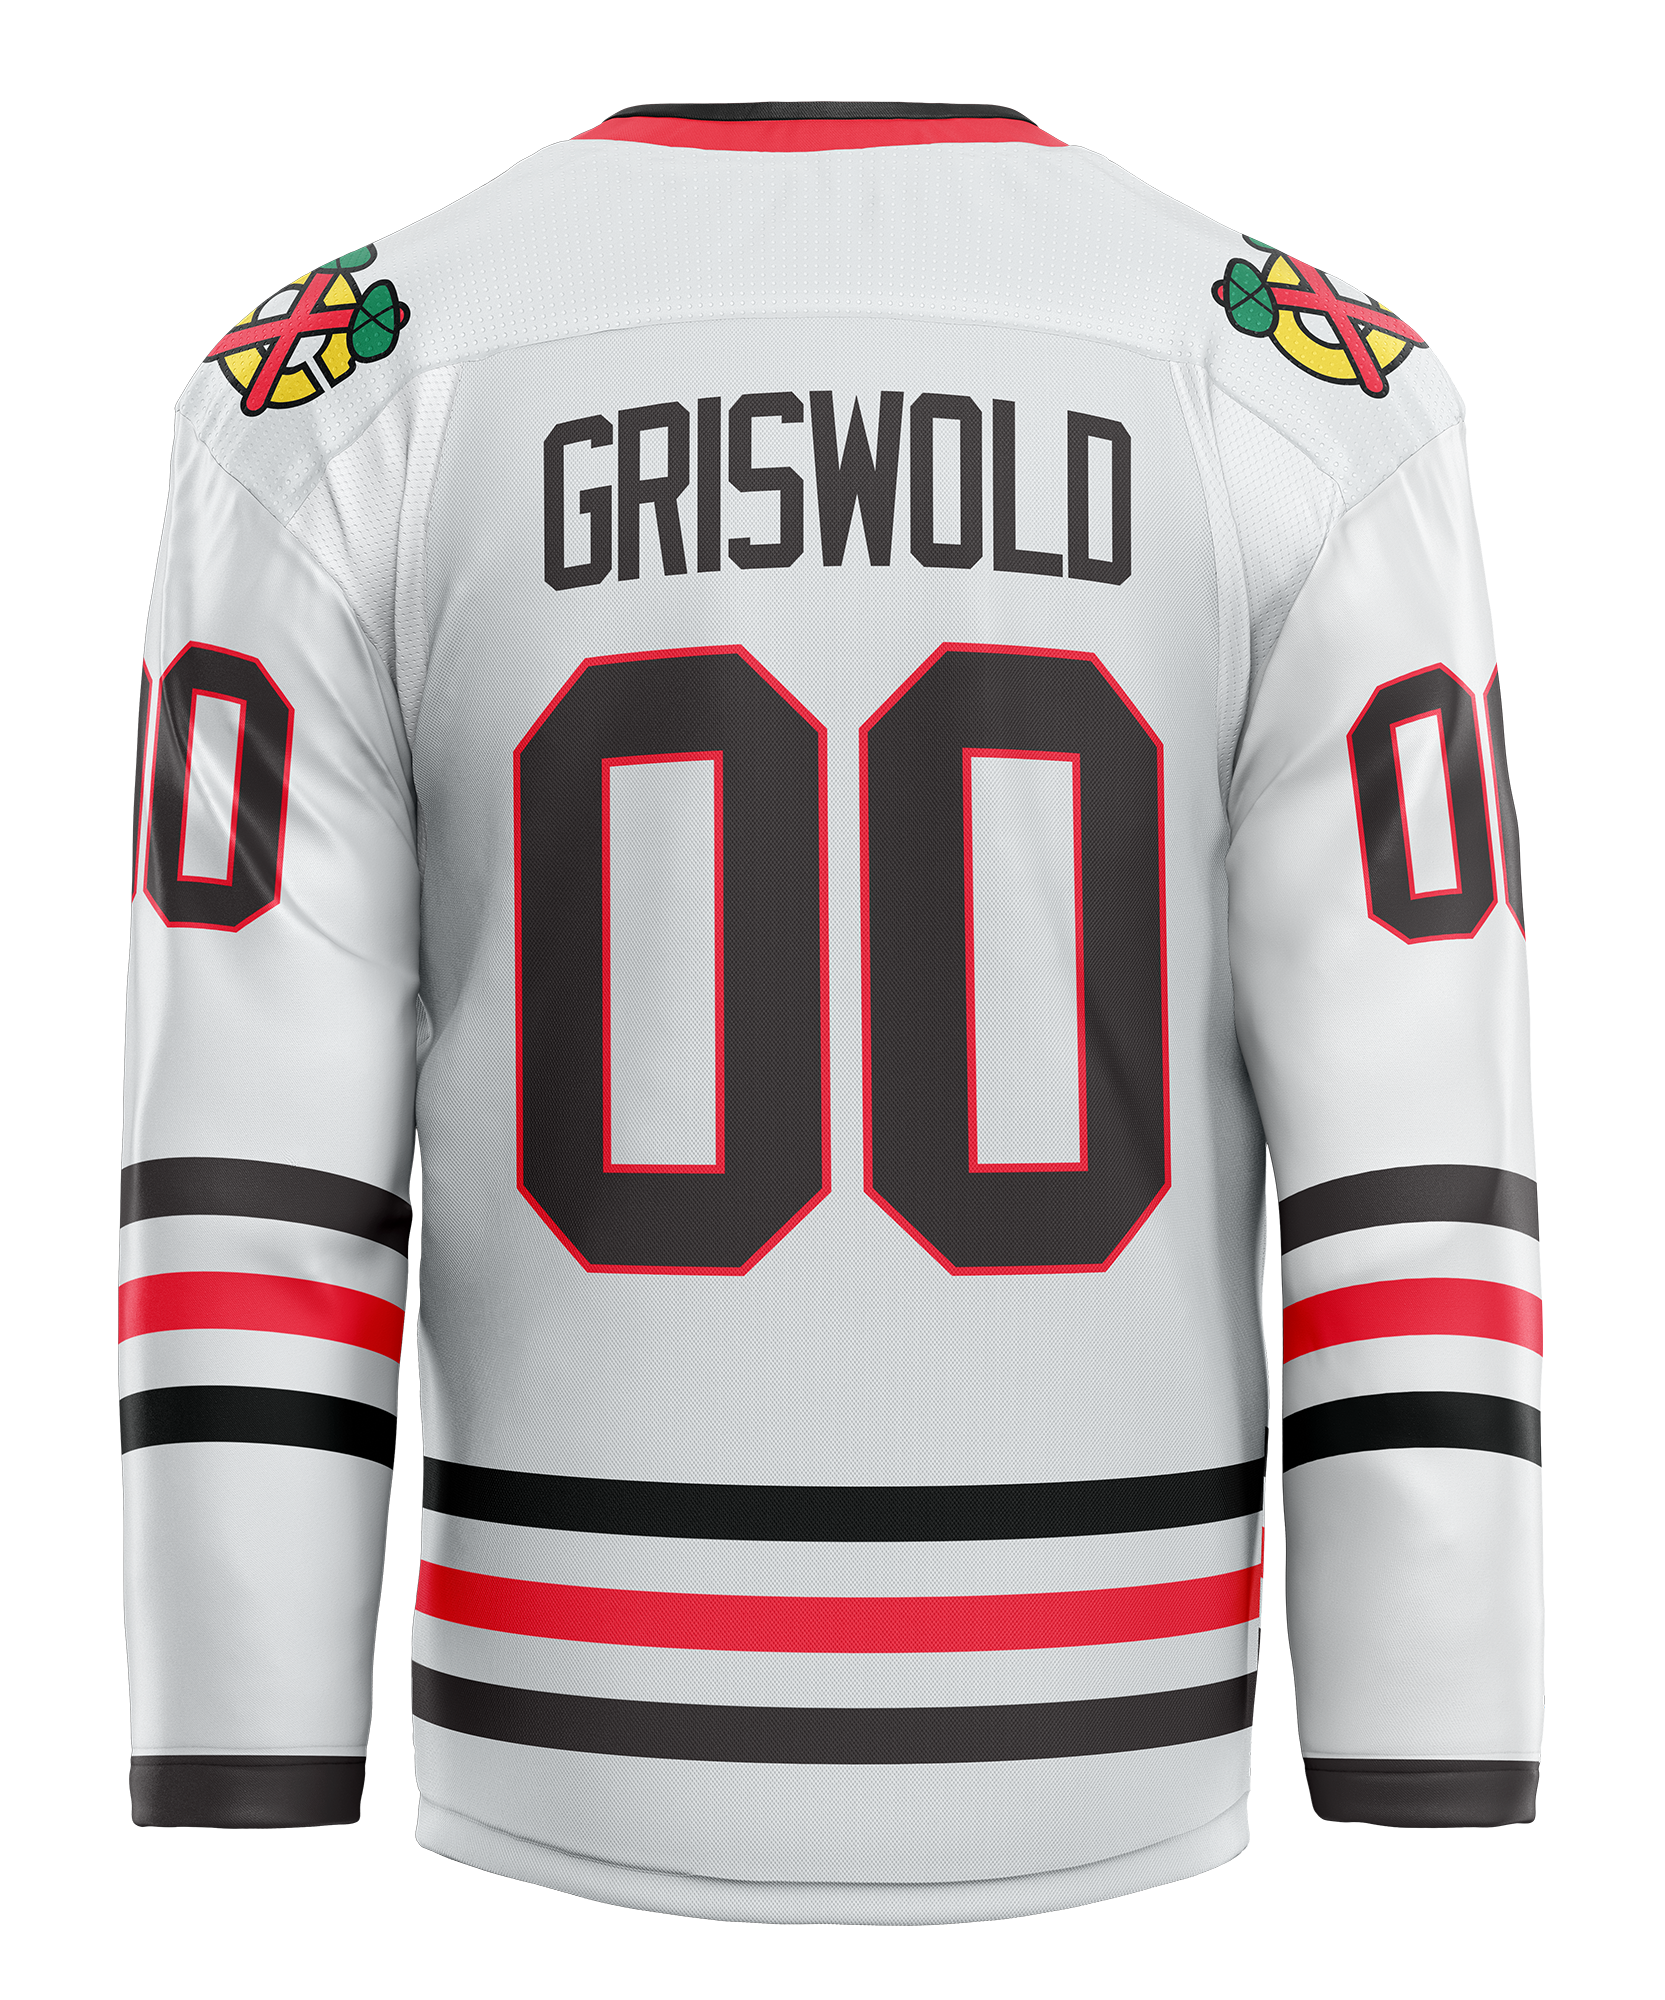 clark griswold blackhawks jersey, Off 65%